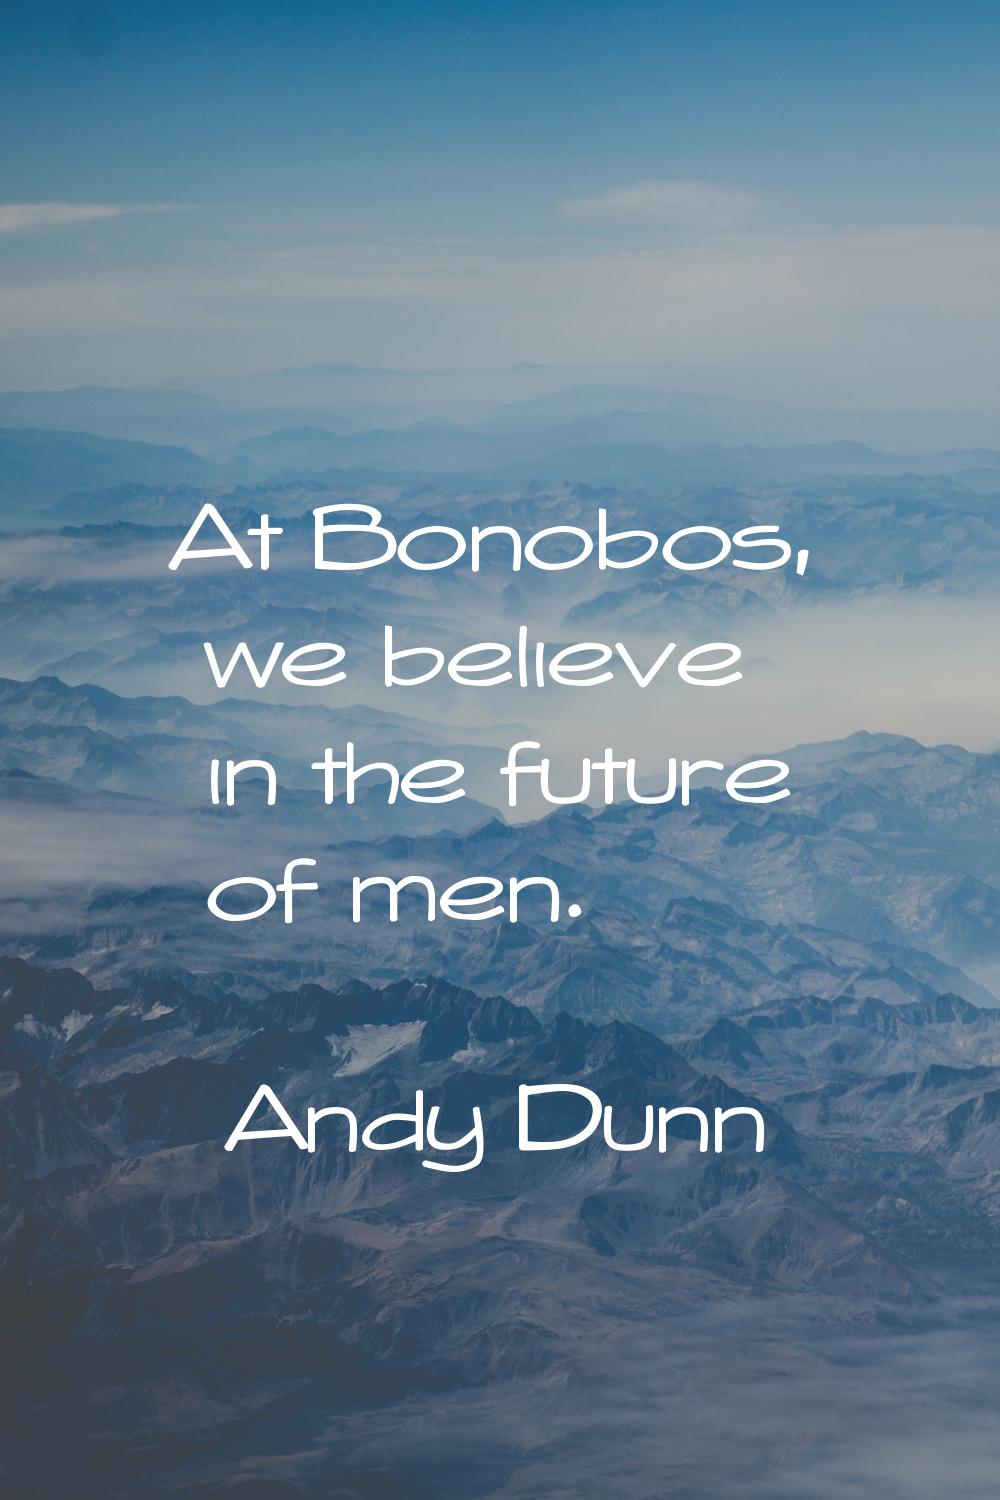 At Bonobos, we believe in the future of men.